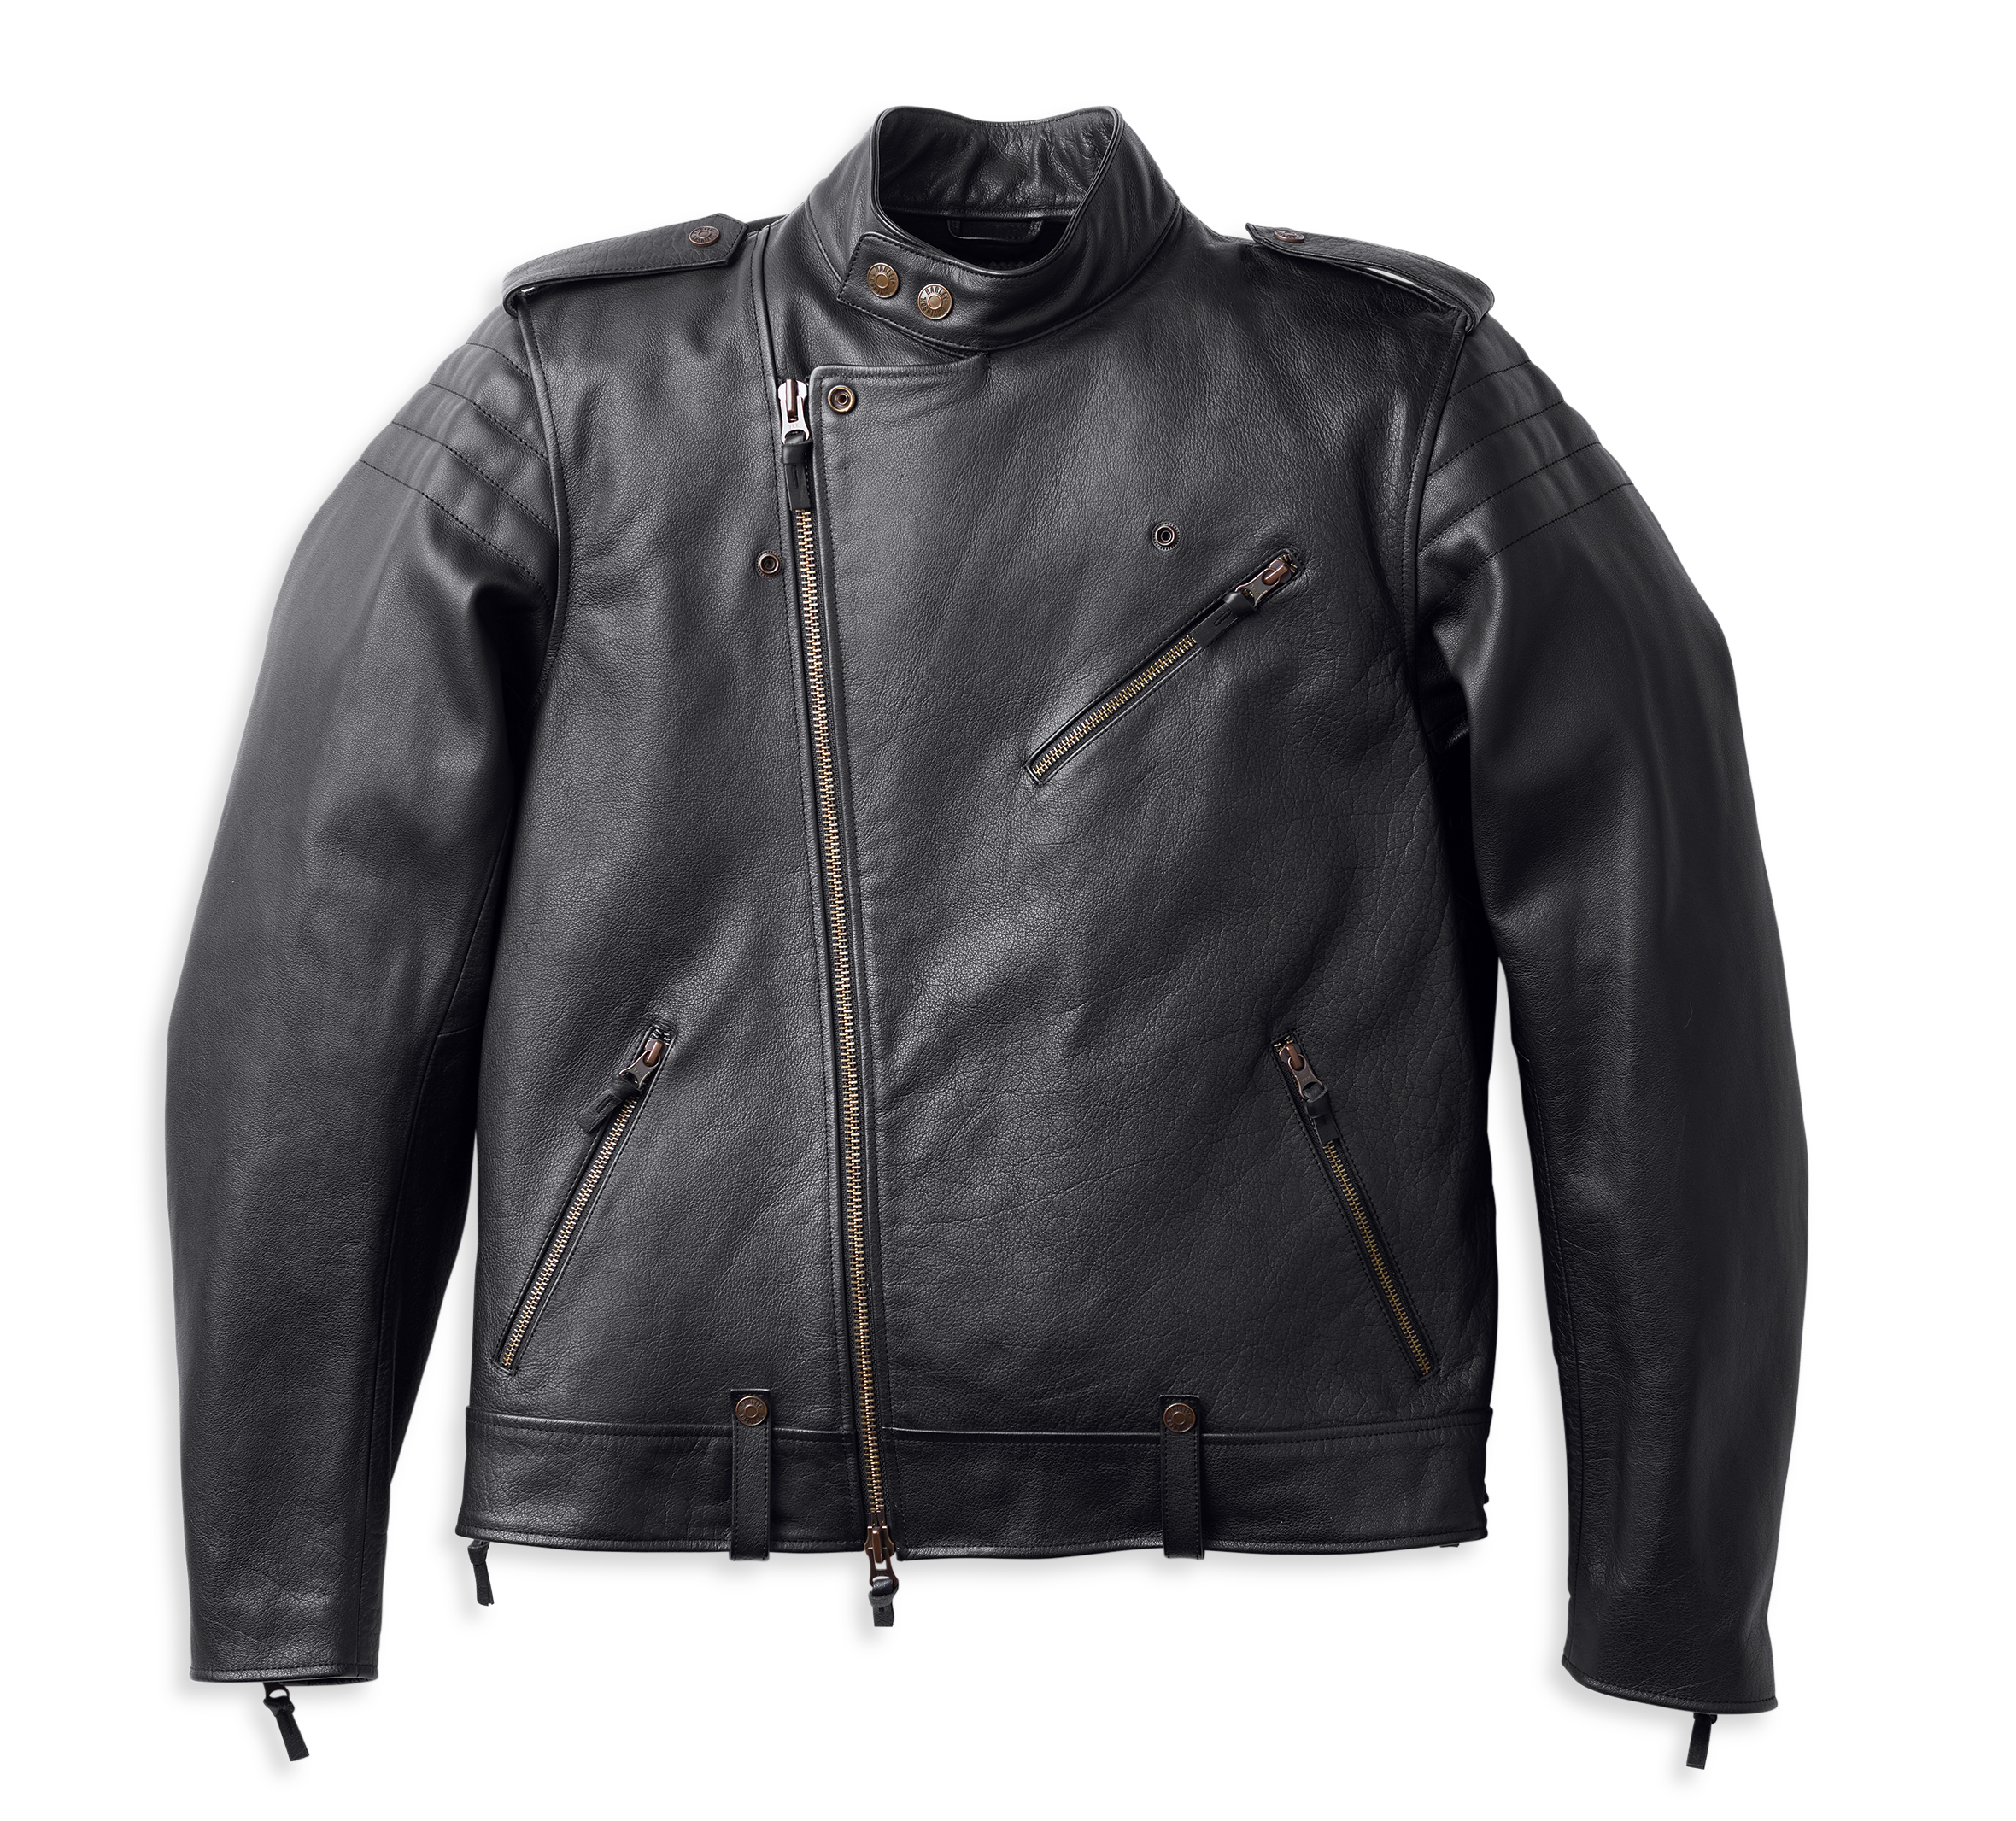 Mens Harley Davidson motorcycle jacket Large